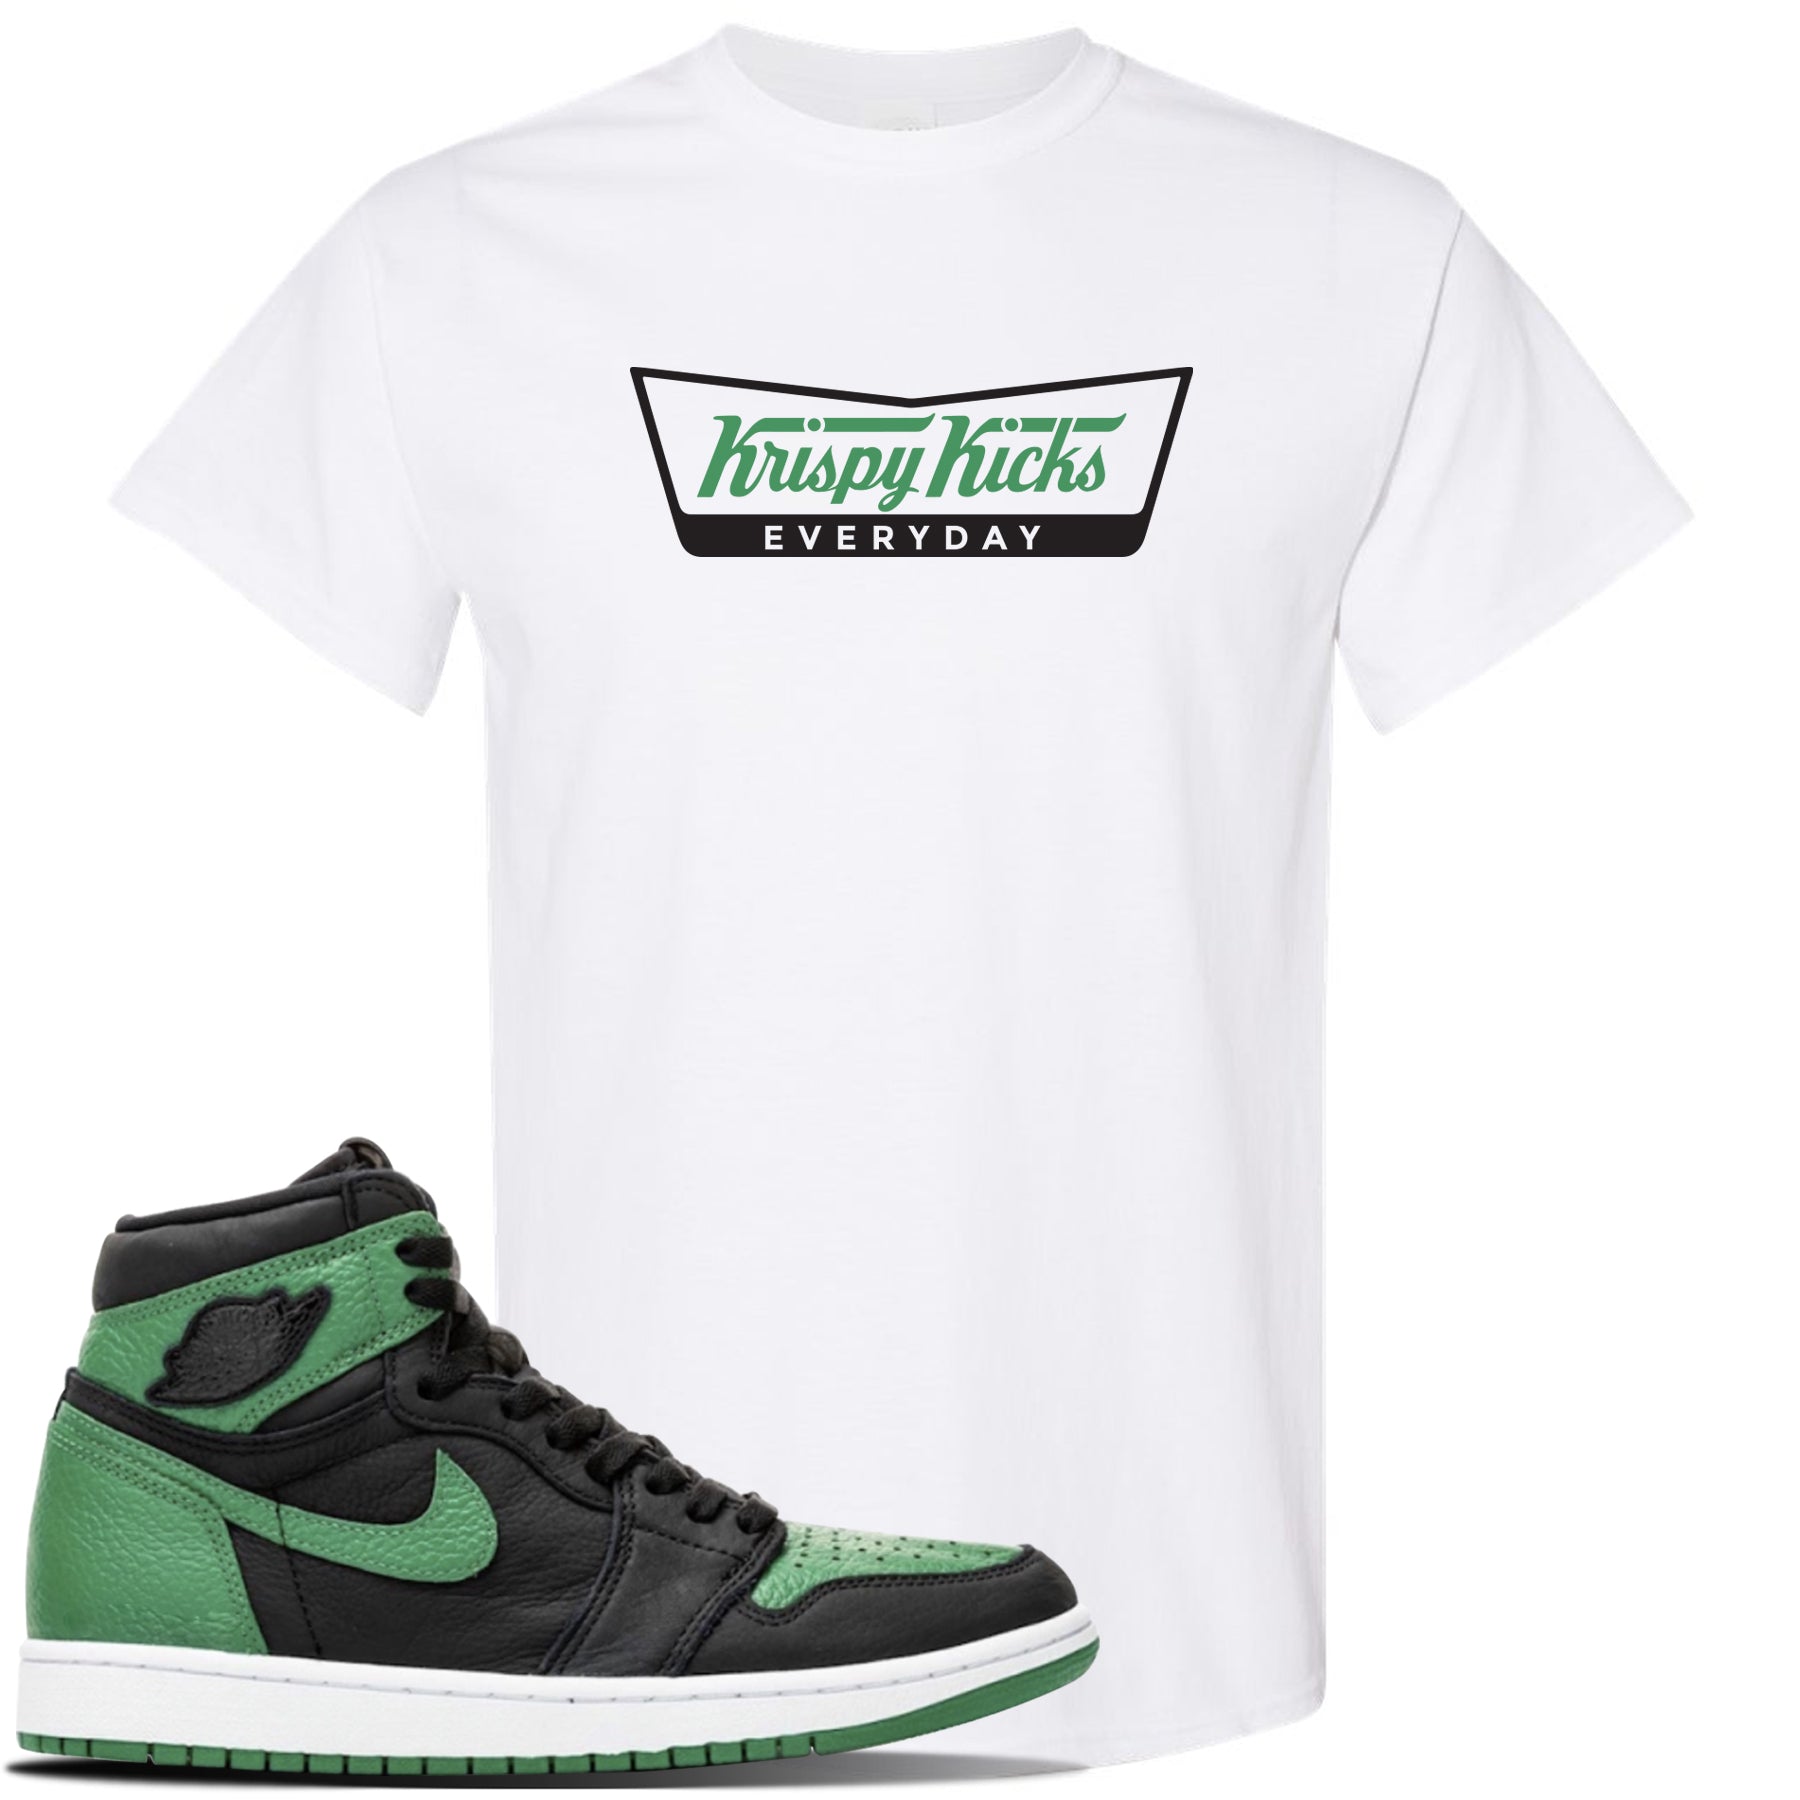 shirts to match jordan 1 pine green